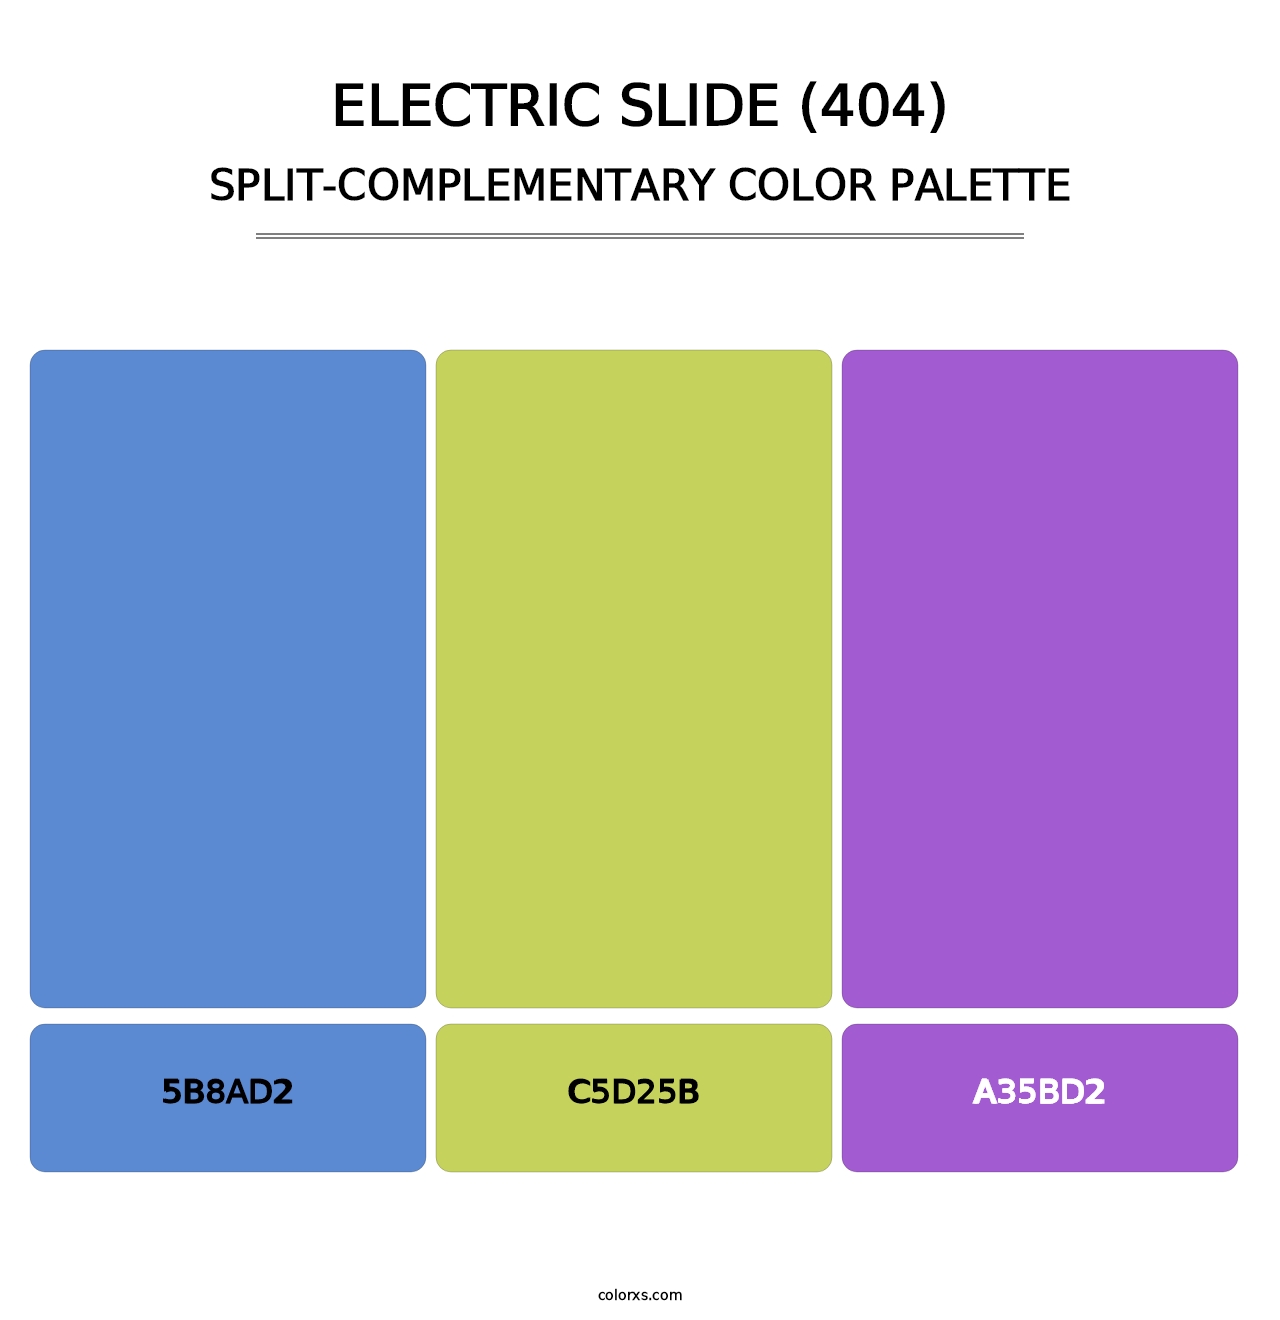 Electric Slide (404) - Split-Complementary Color Palette